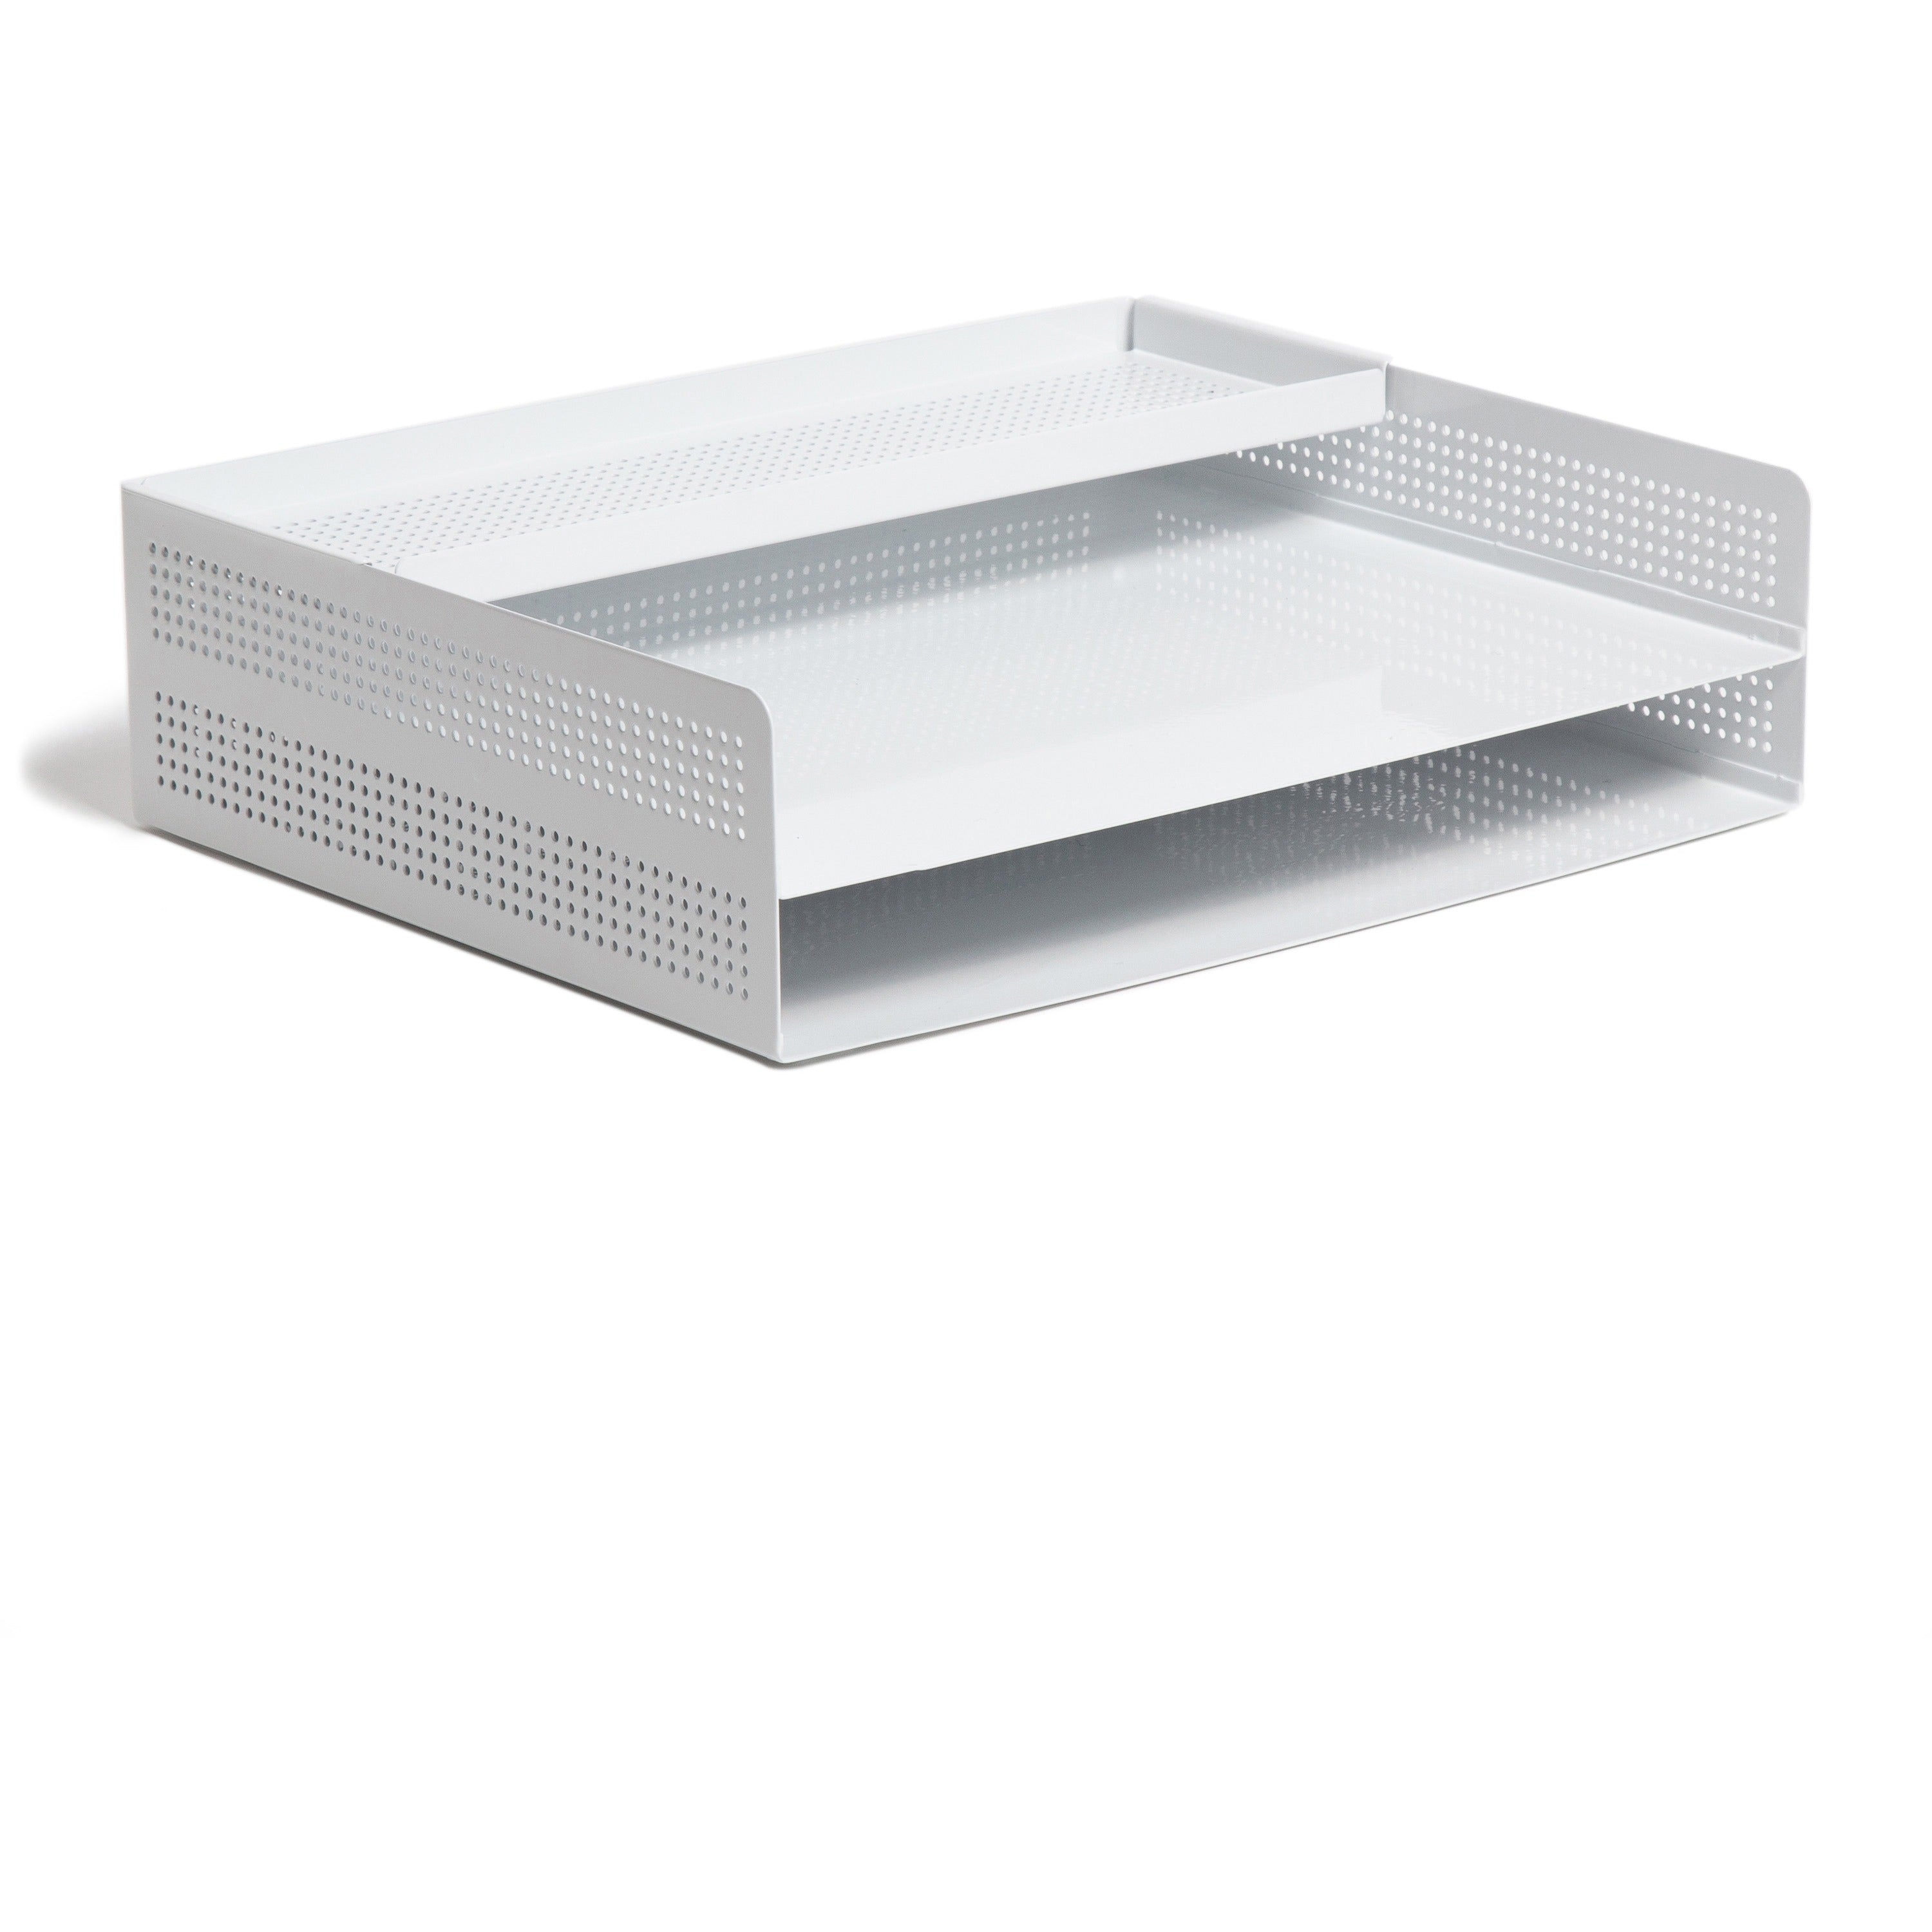 u-brands-perforated-paper-tray-durable-white-metal-1-each_ubr5718u0106 - 1